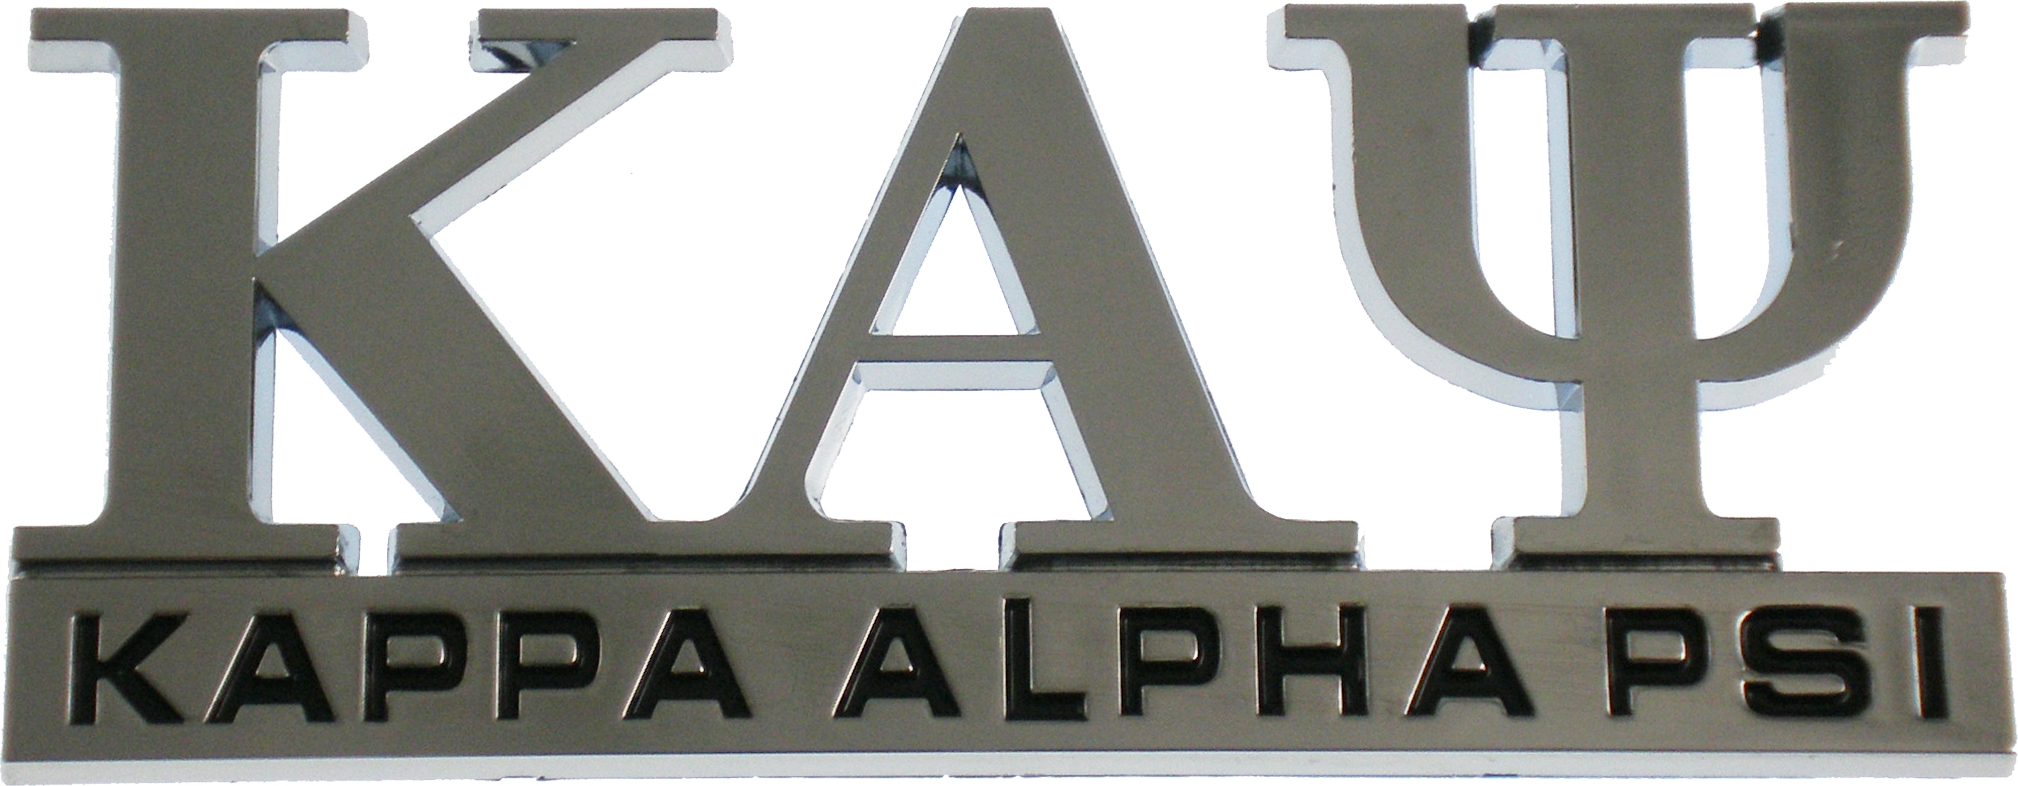 Kappa Alpha Psi Chrome Cut Out Car Emblem [Silver - 4